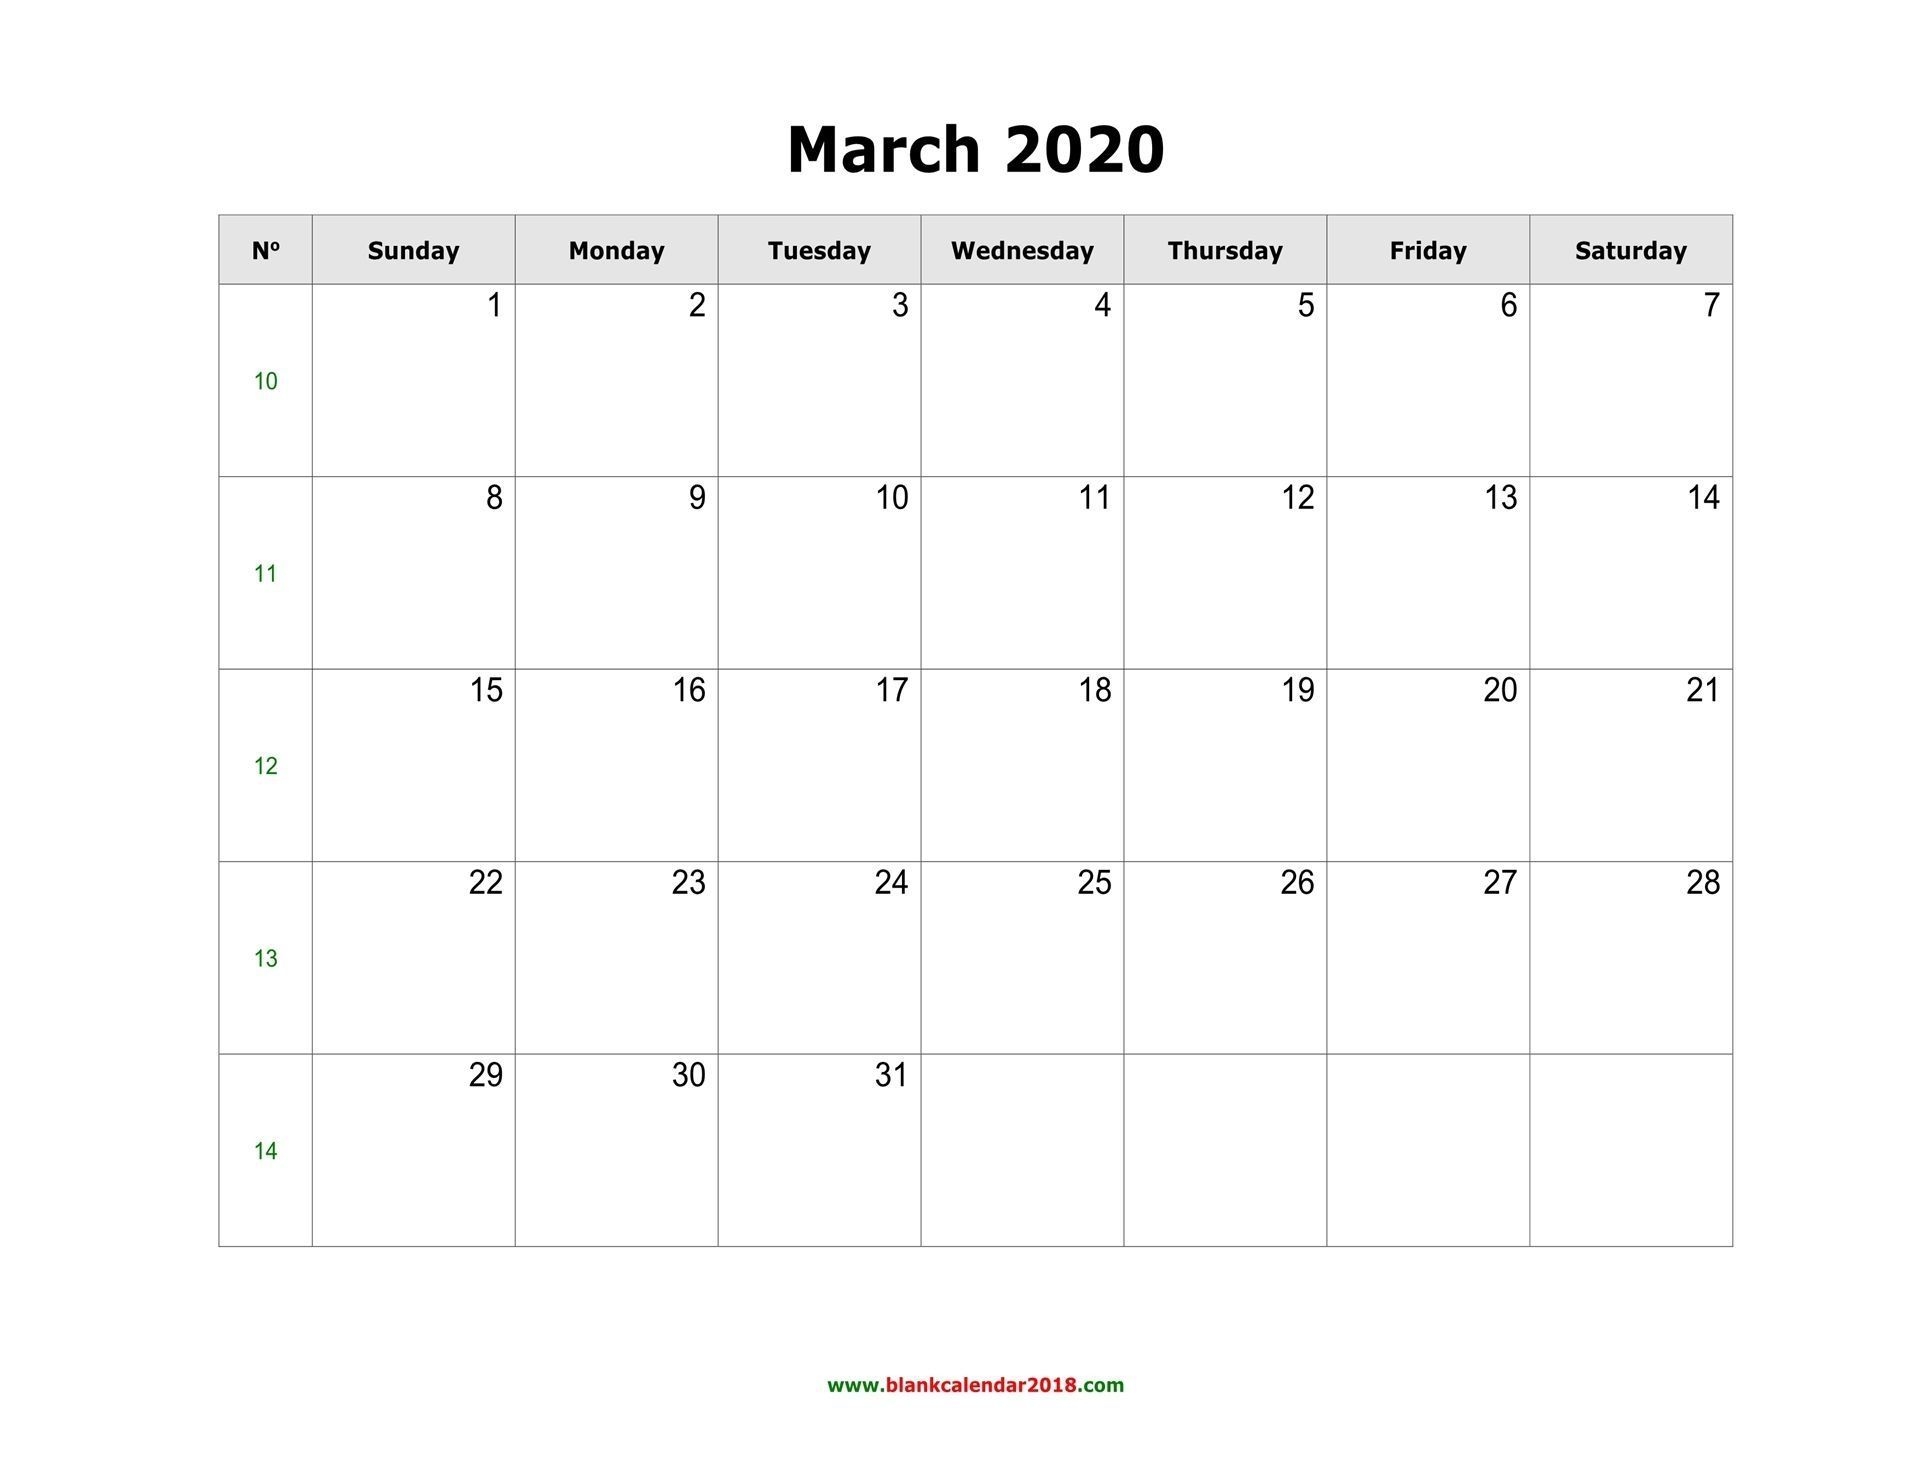 free calendar you can edit online in 2020 | blank calendar